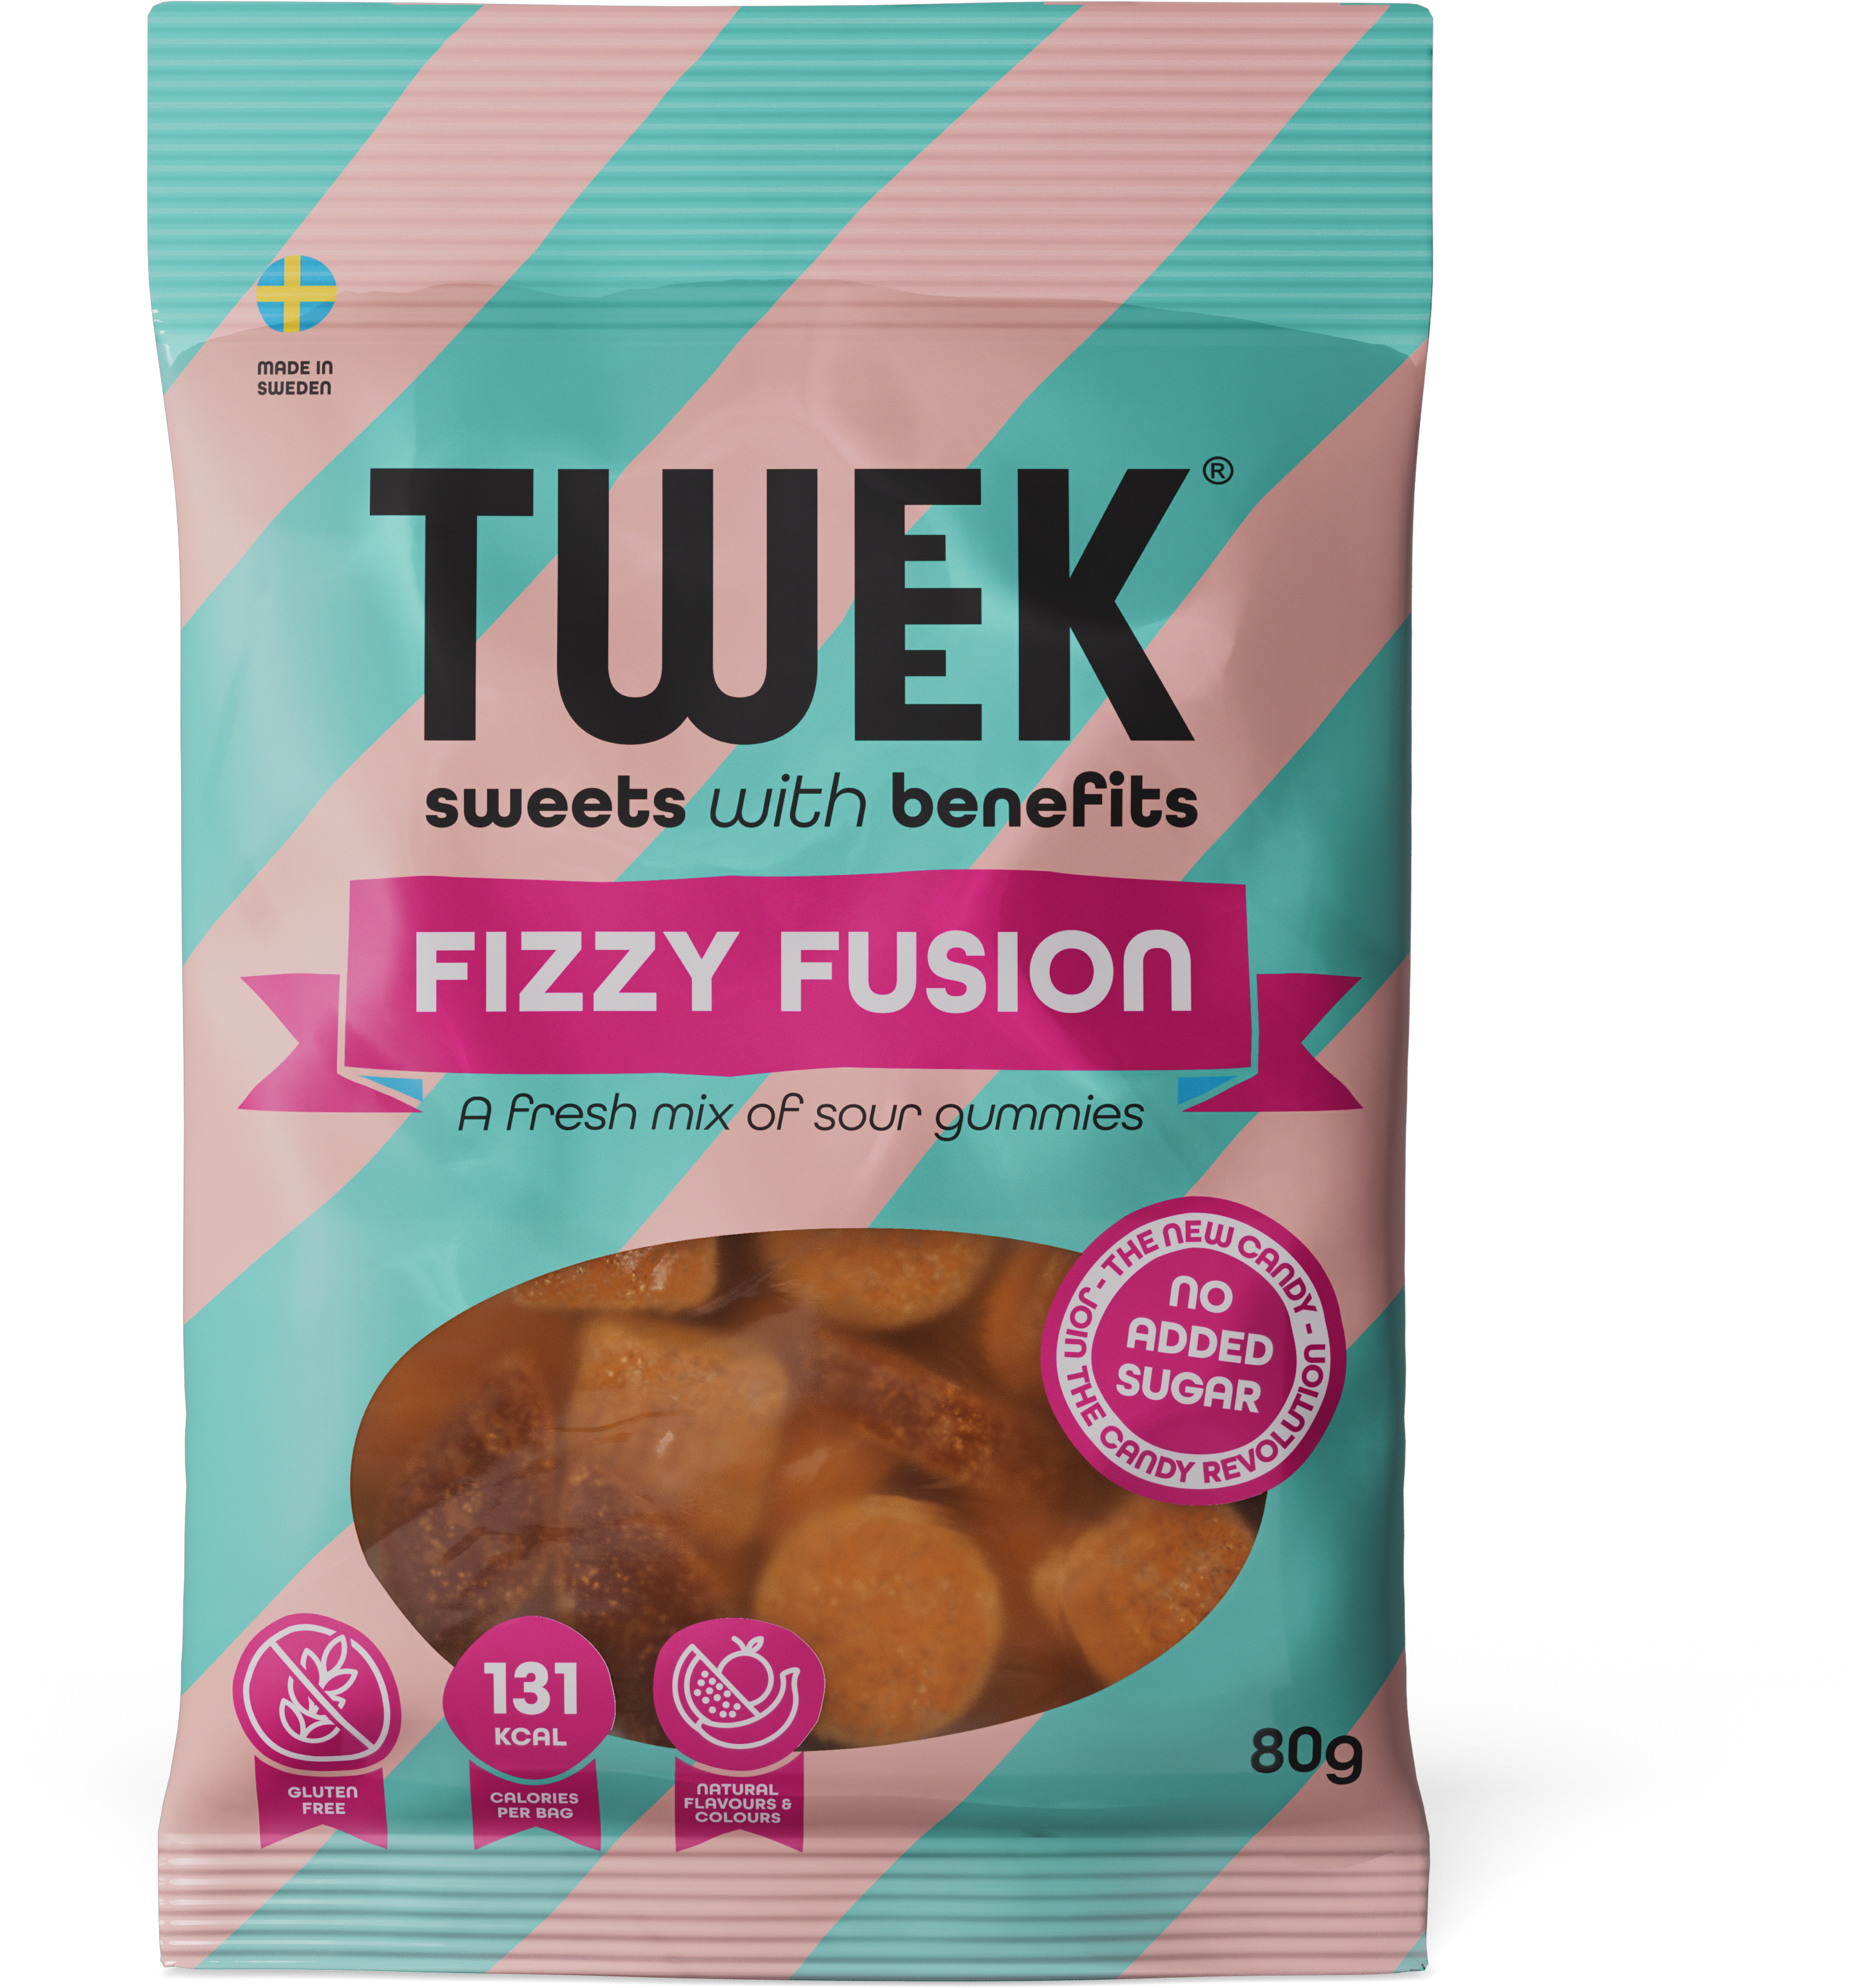 Tweek-FizzyFusion